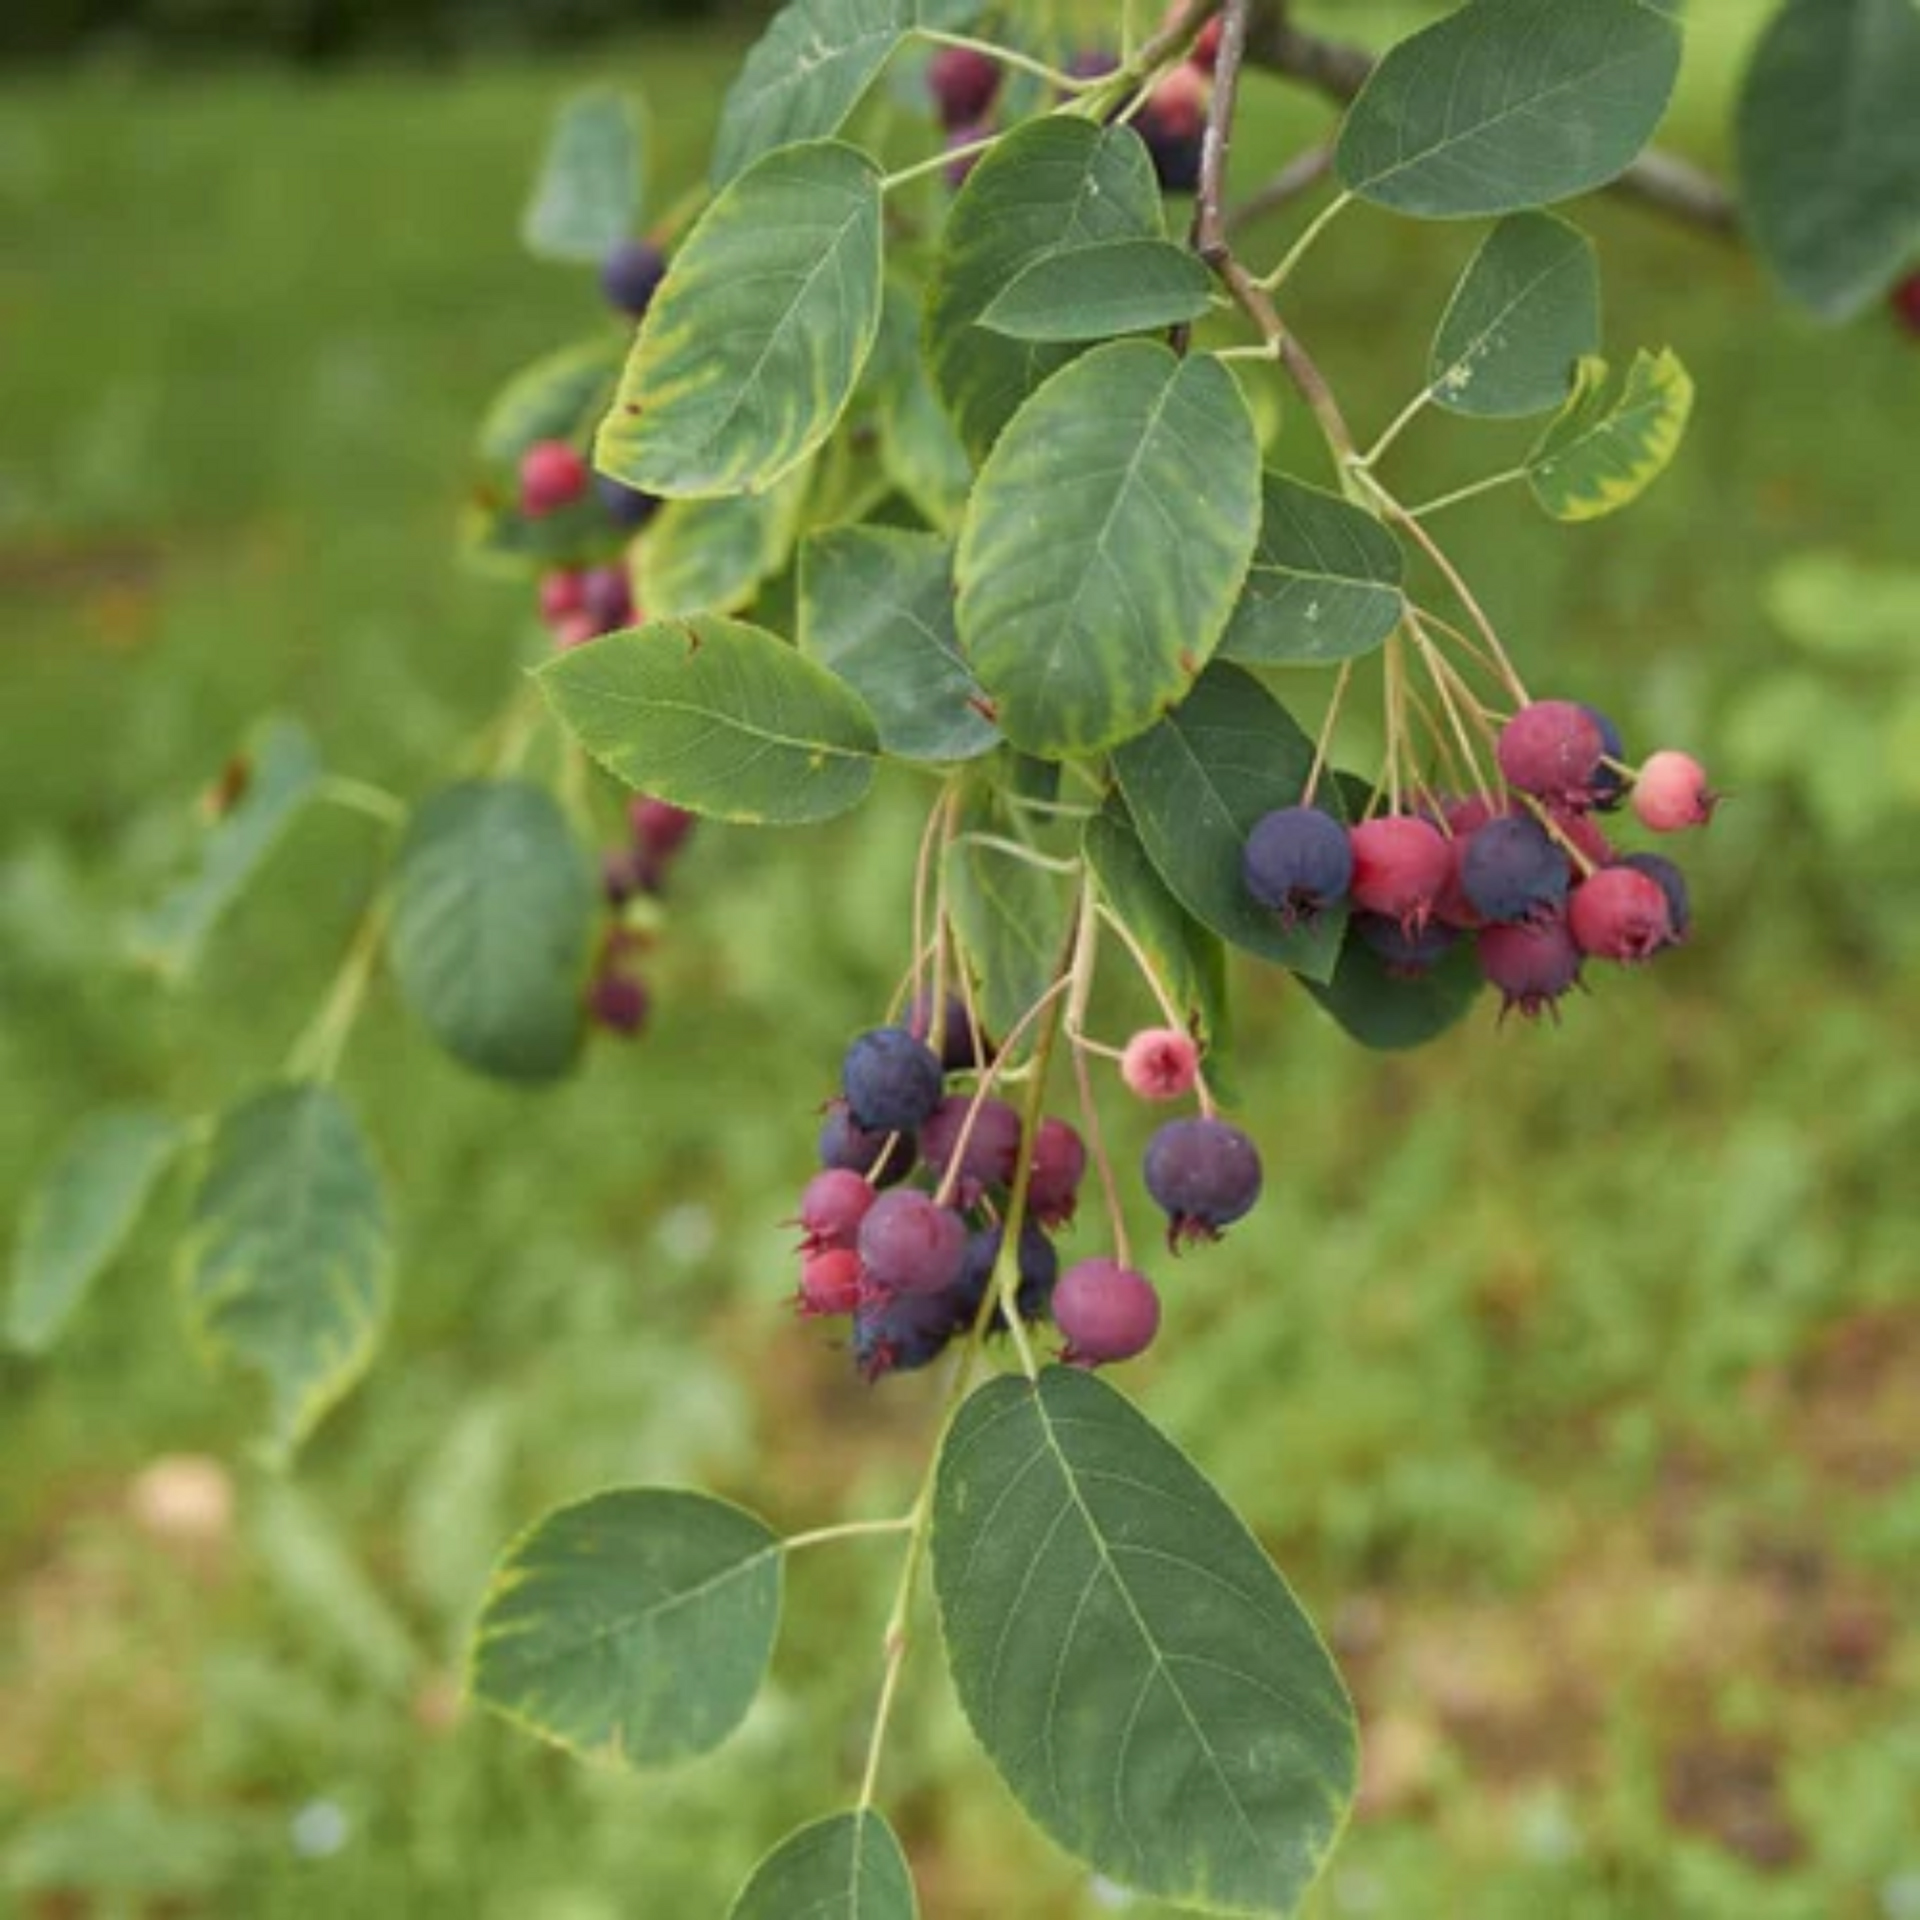 Downy Serviceberry berries